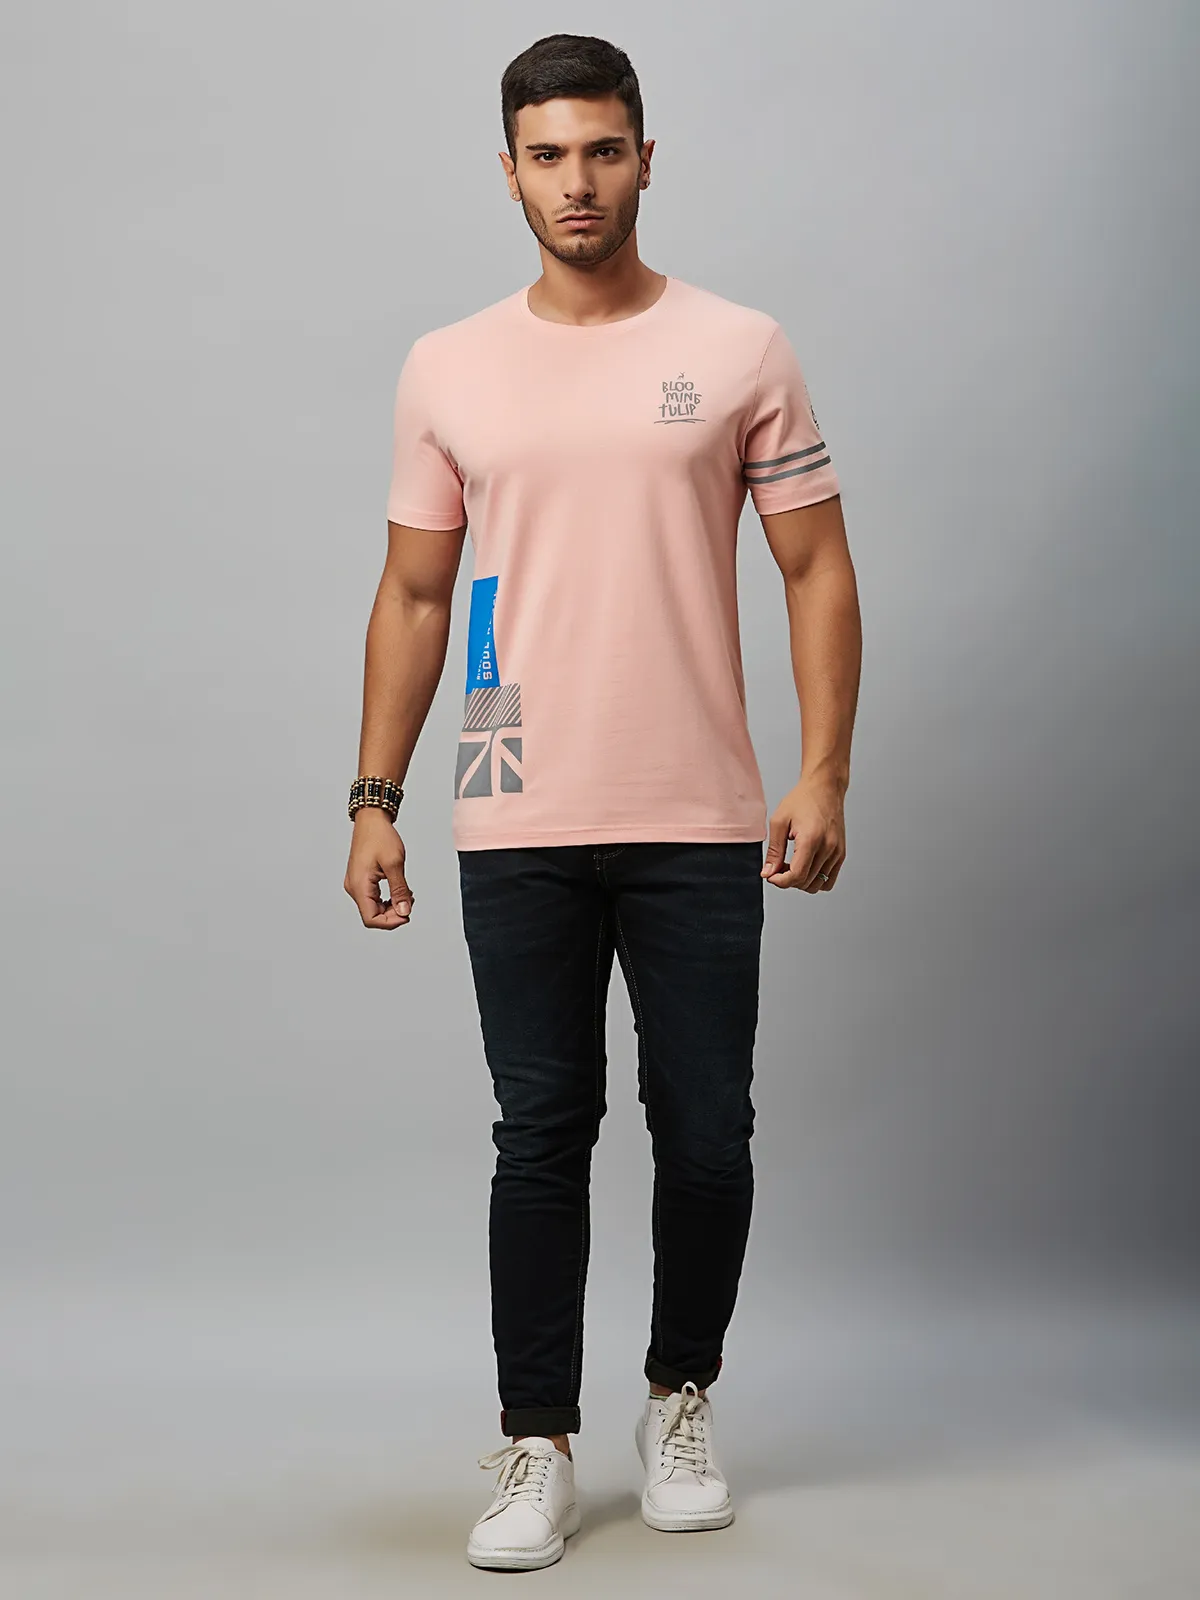 River Blue pink printed cotton half sleeves t shirt